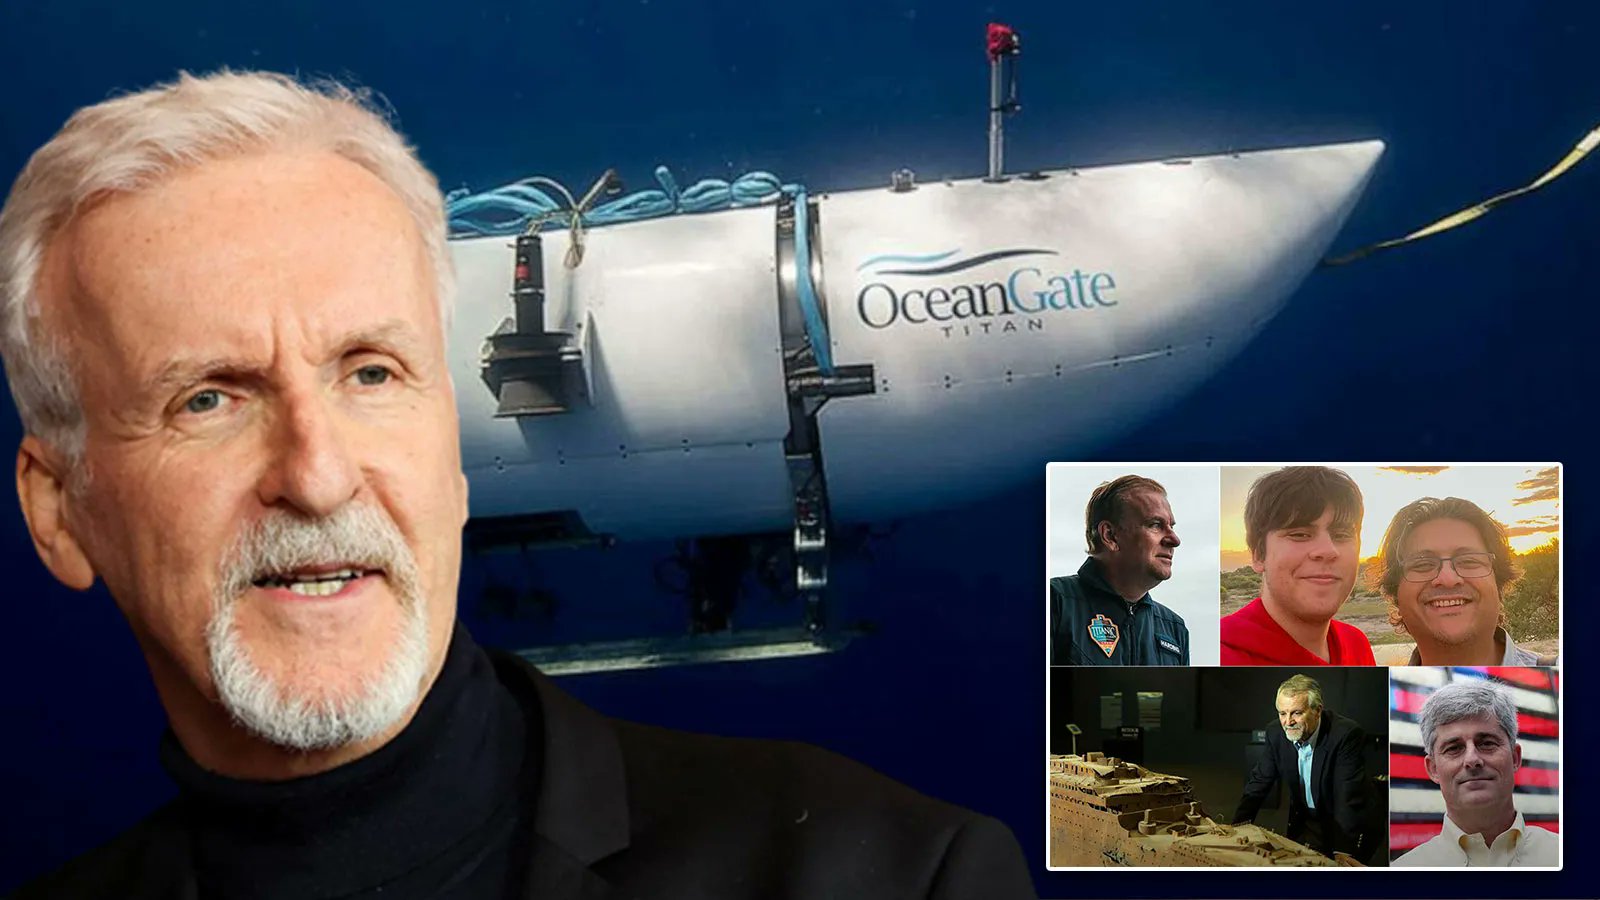 Titanic Oceangate: Five Men Confirmed Dead "I Knew of Titanic Sub Implosion" James Cameron